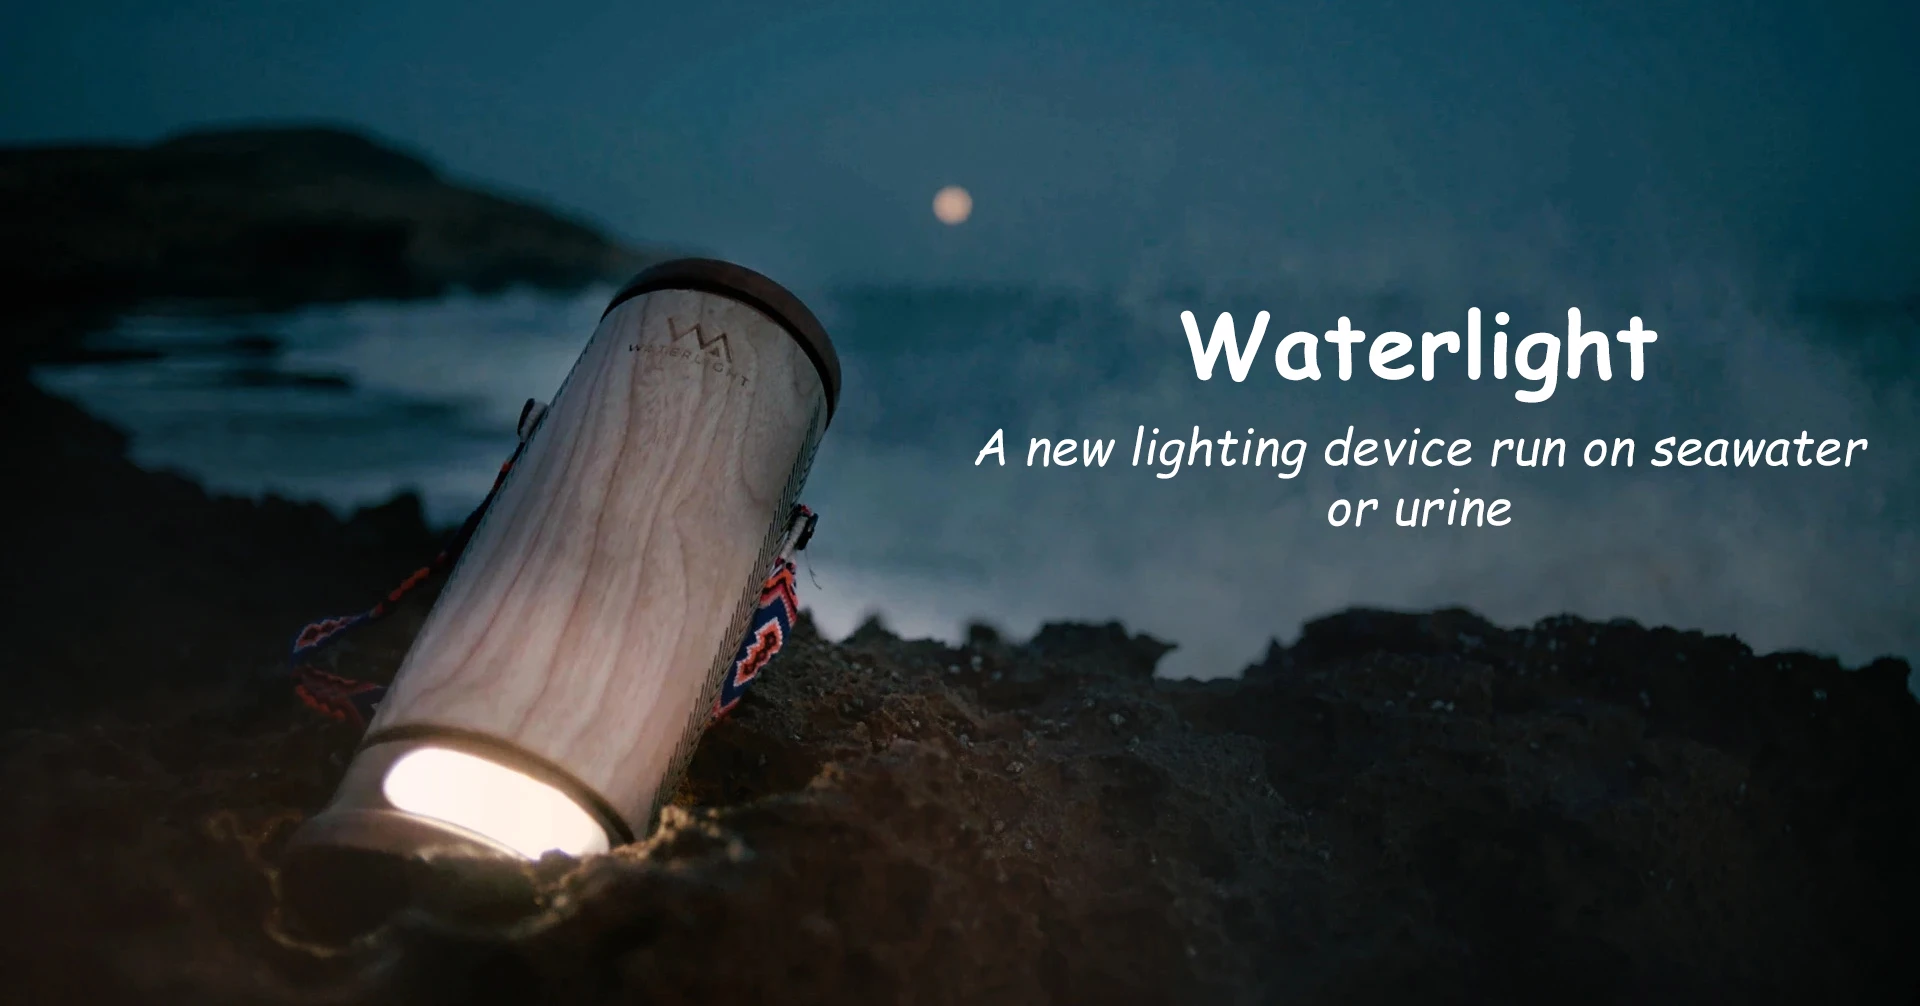 Waterlight - A new lighting device run on seawater or urine